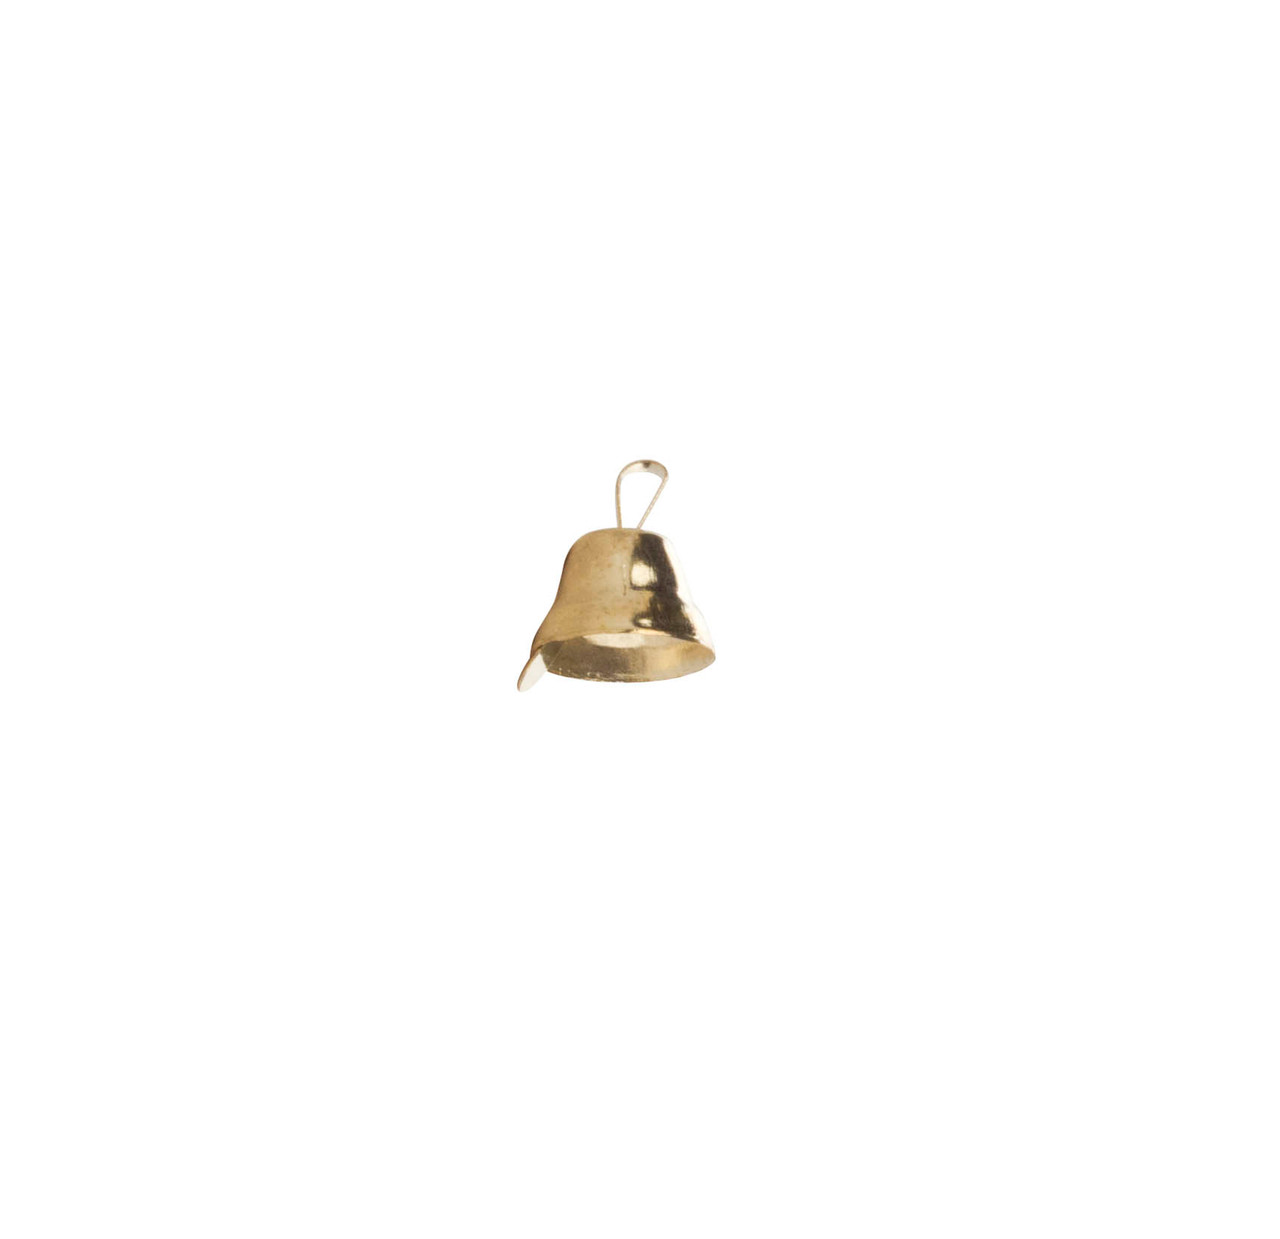 German Small Metal Bell  ChristKindl-Markt German Gifts